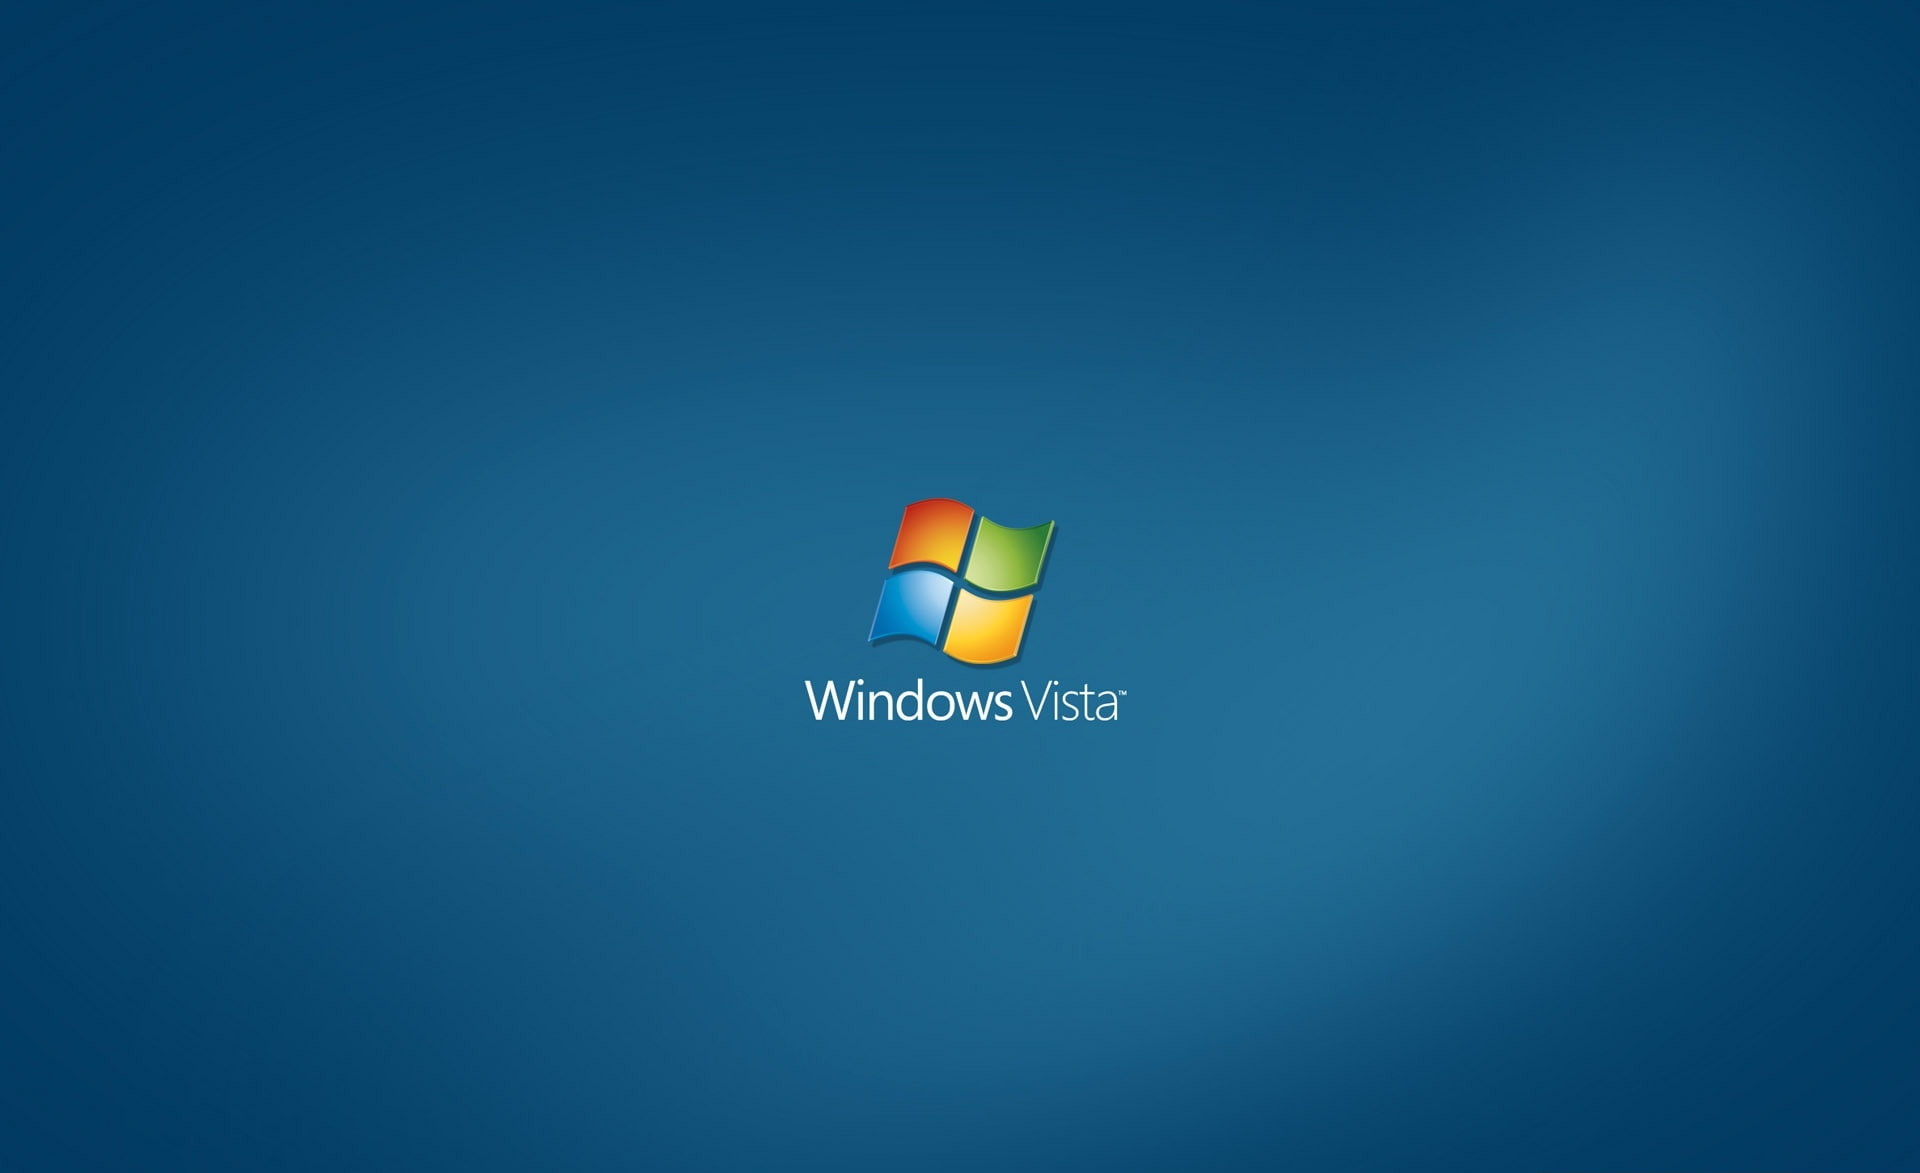 Windows Vista Aero 32, Microsoft Windows Visita logo, blue, colored background